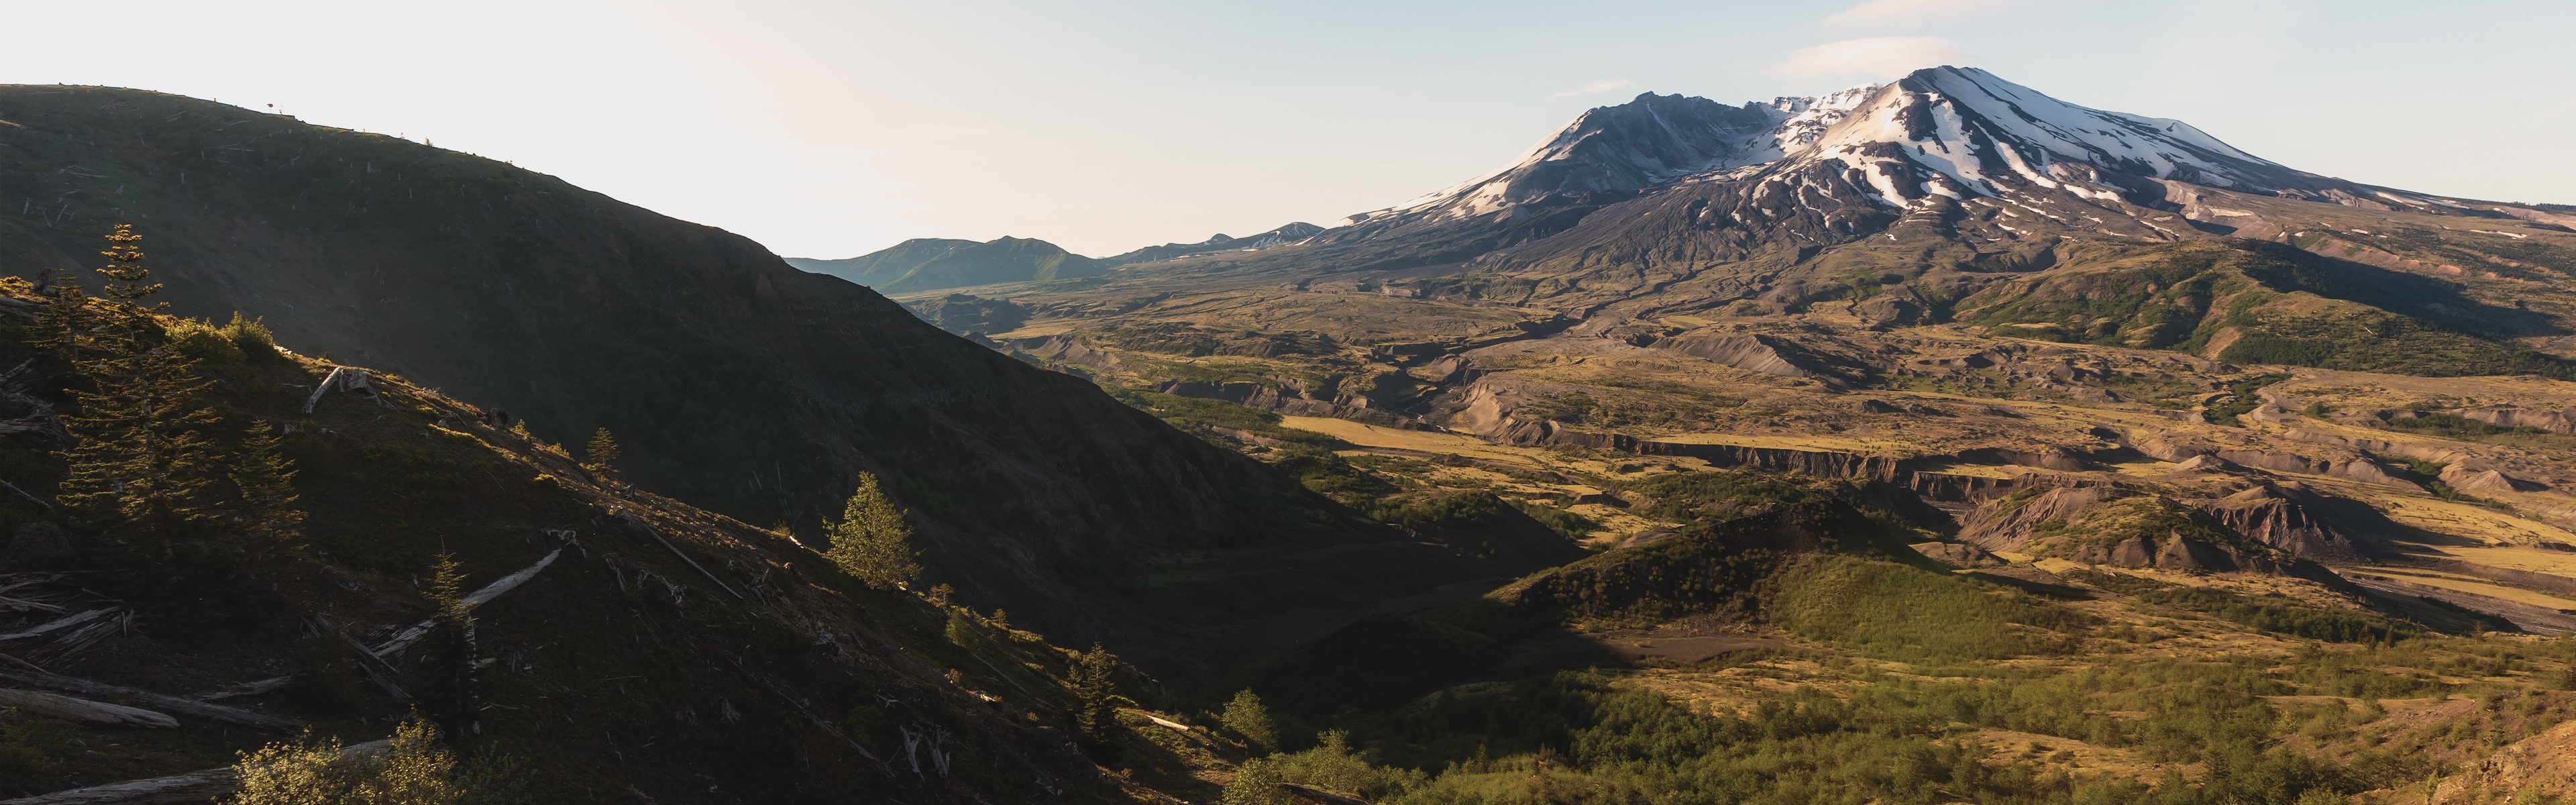 Mount St. Helens, Wallpaper album, Nature photography, Landscape, 3840x1200 Dual Screen Desktop